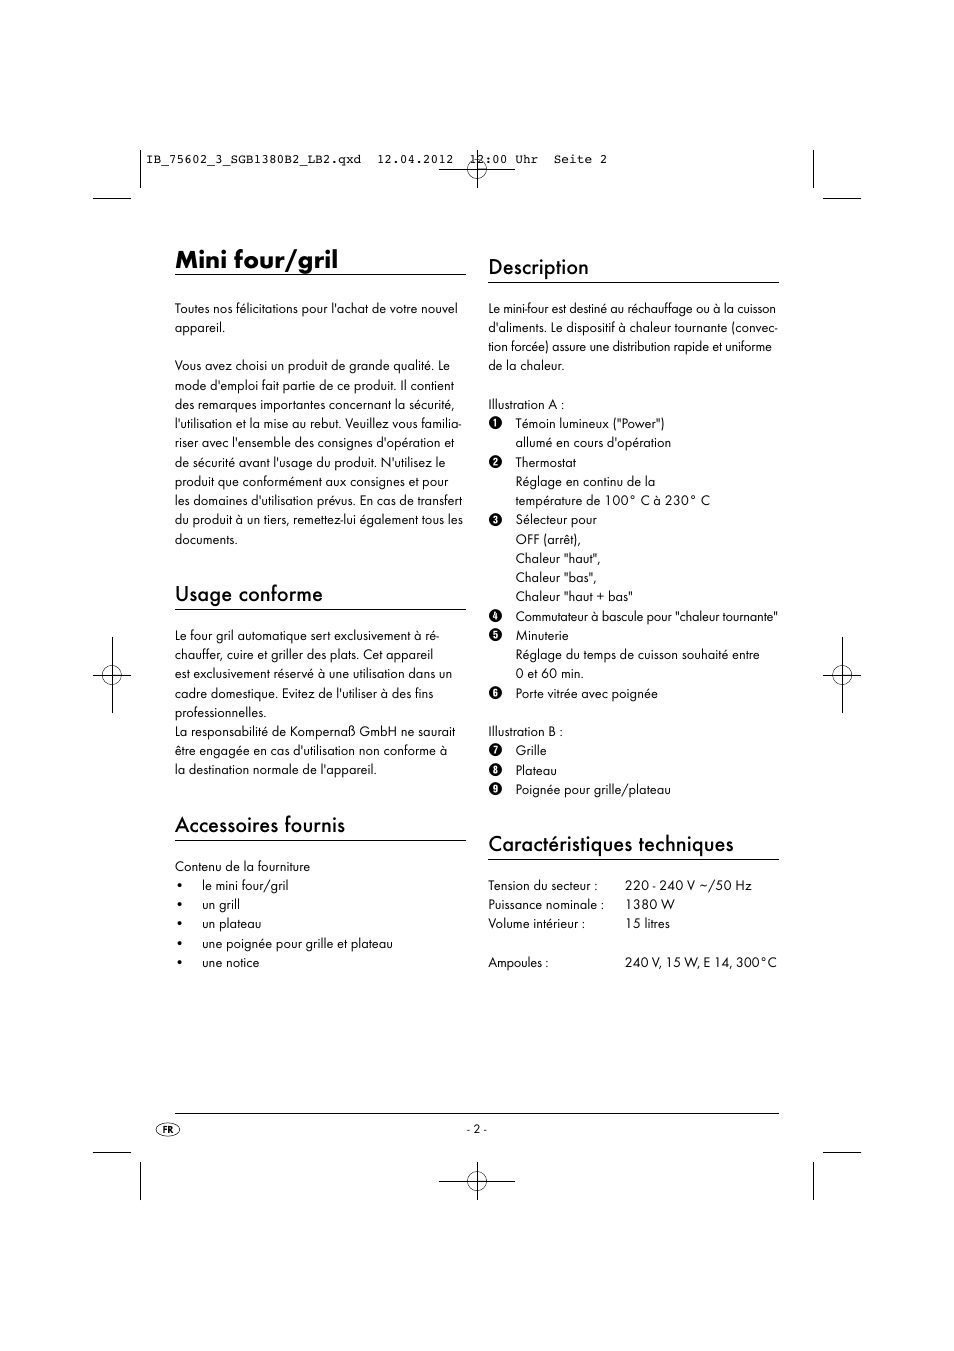 Mini four/gril, Usage conforme, Accessoires fournis | Silvercrest SGB 1380  B2 User Manual | Page 4 / 56